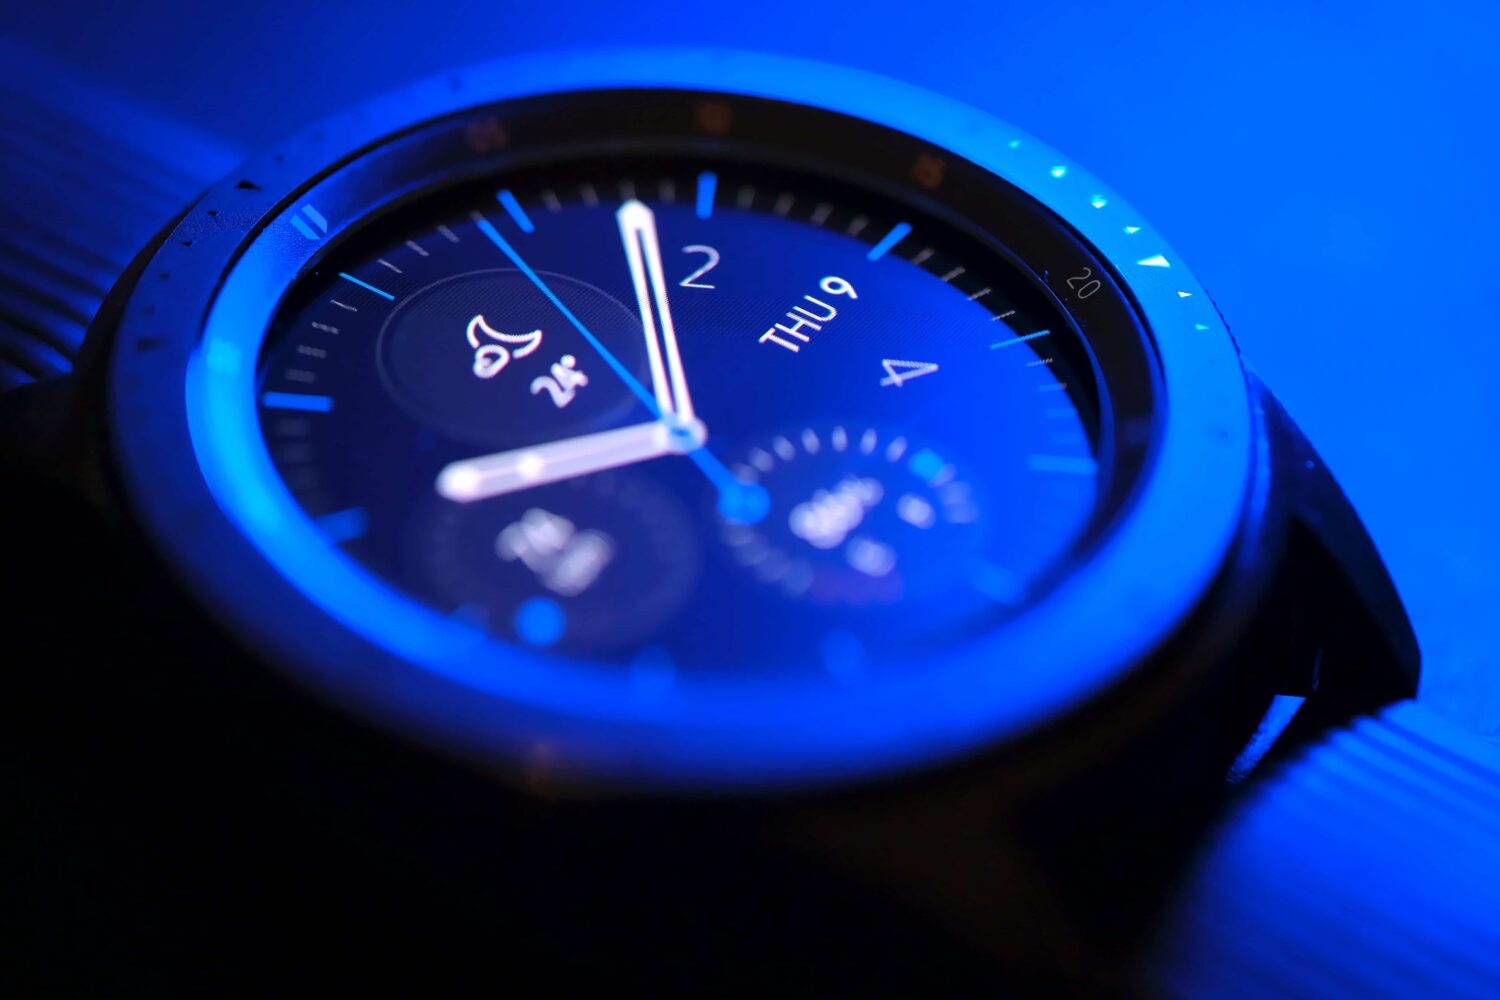 Closeup of Samsung's Galaxy smartwatch